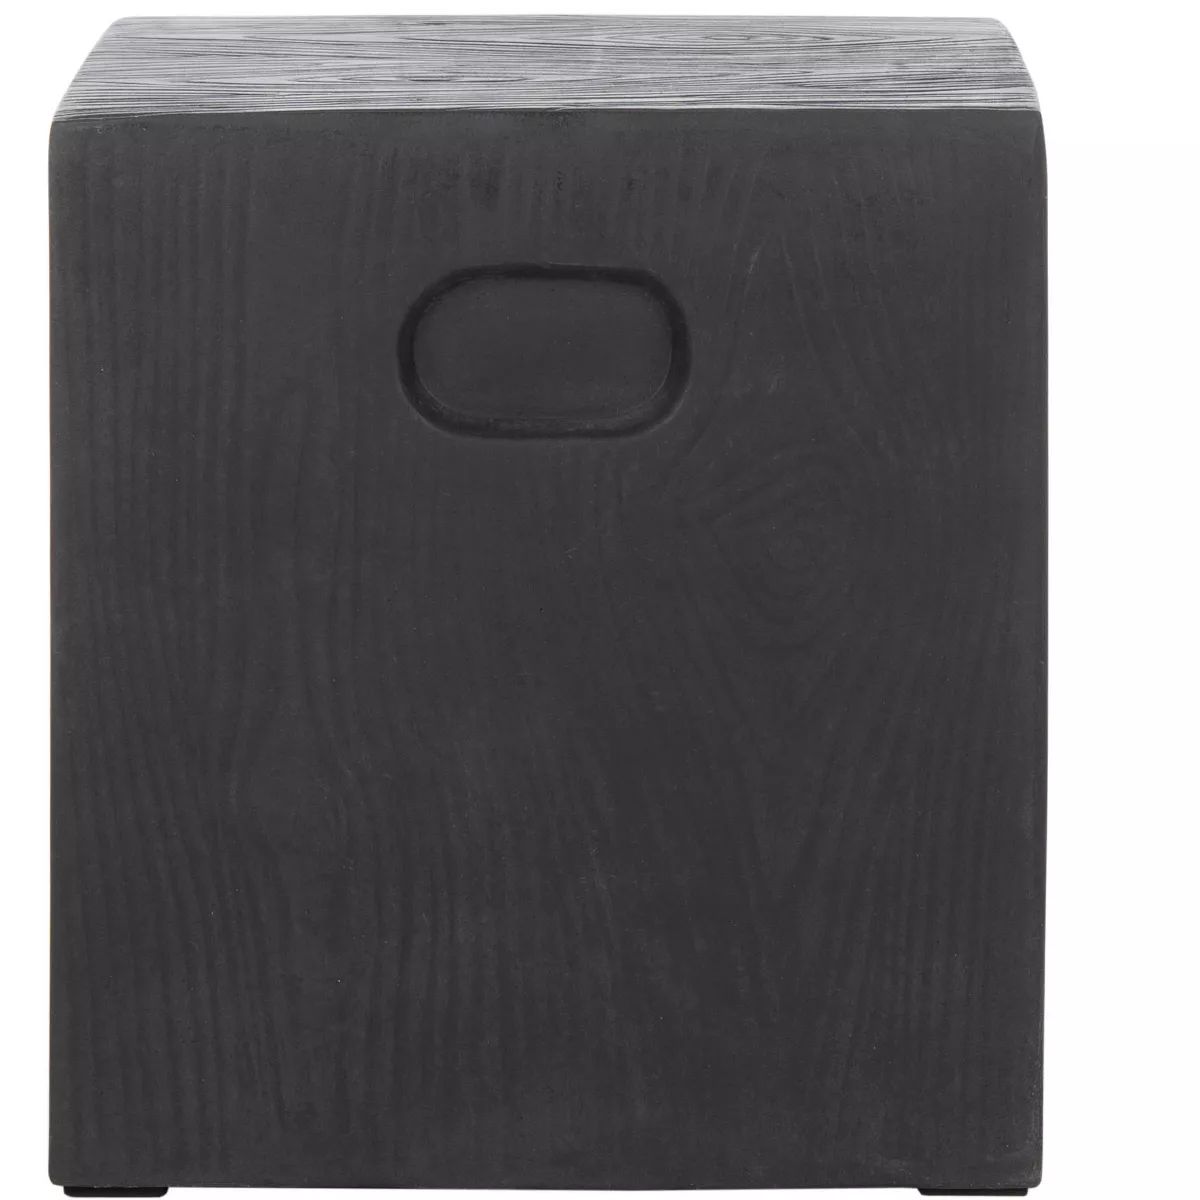 Cube Indoor/Outdoor Modern Concrete Accent Table - Black - Safavieh. | Target